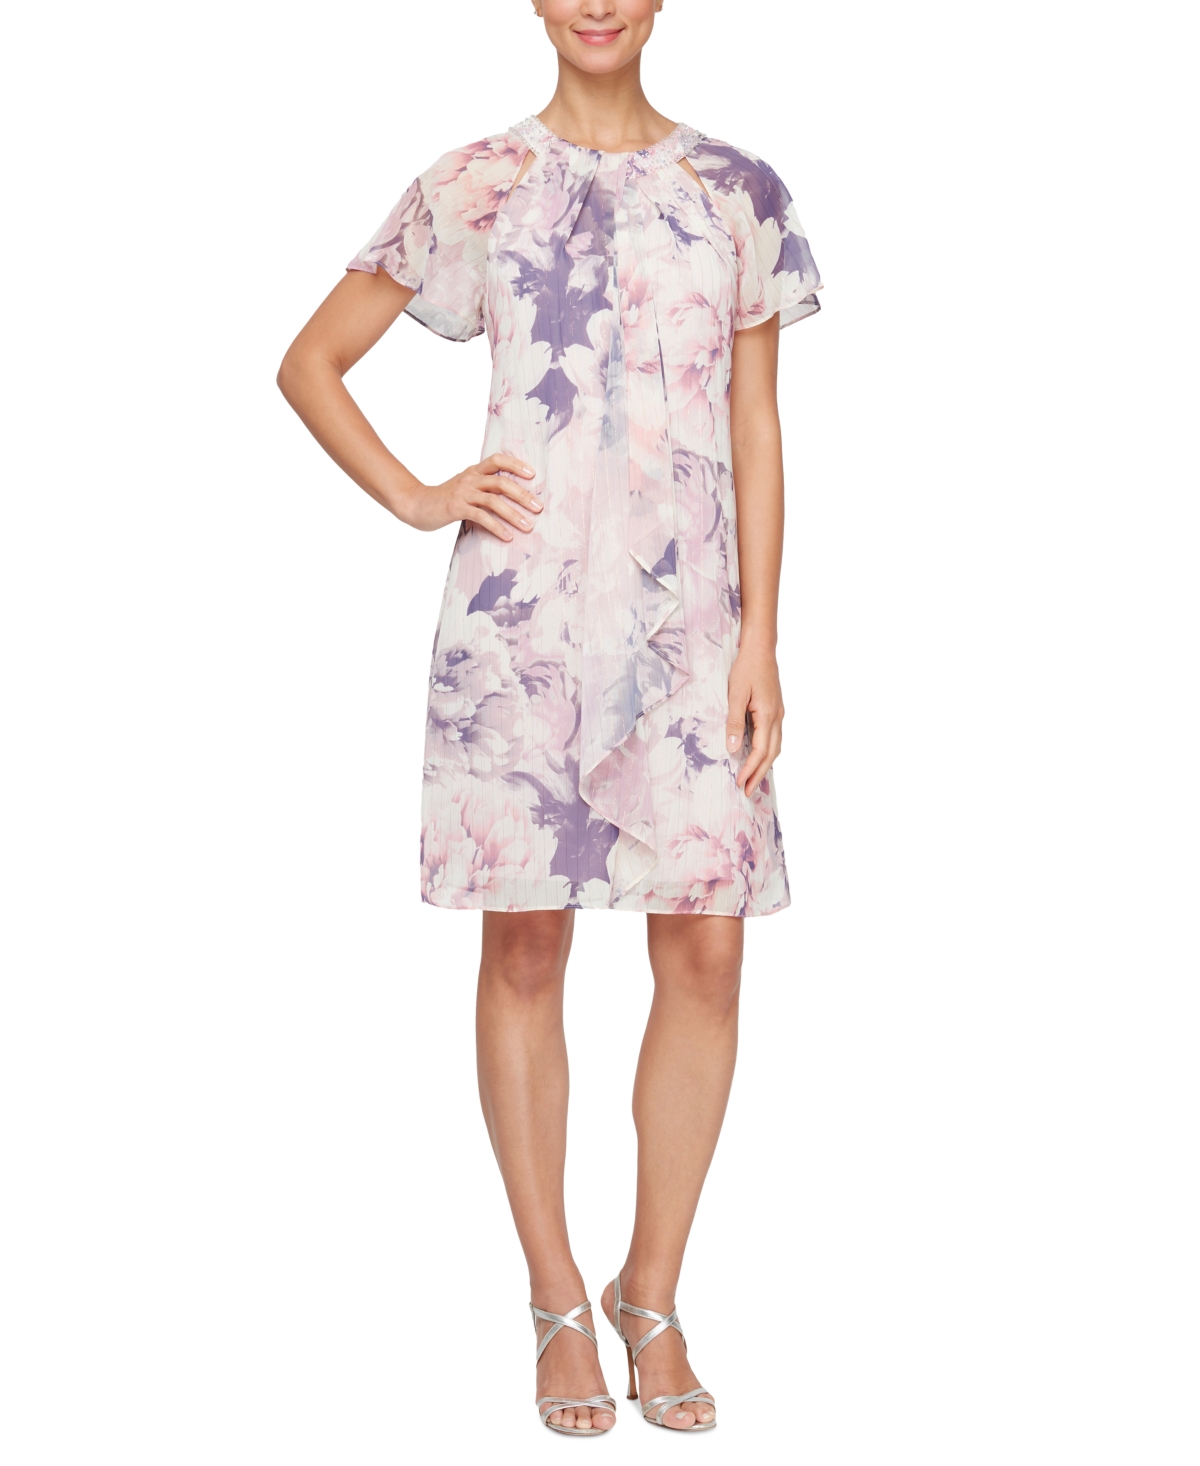 Women's Printed Embellished Neckline Dress - Lilac Multi